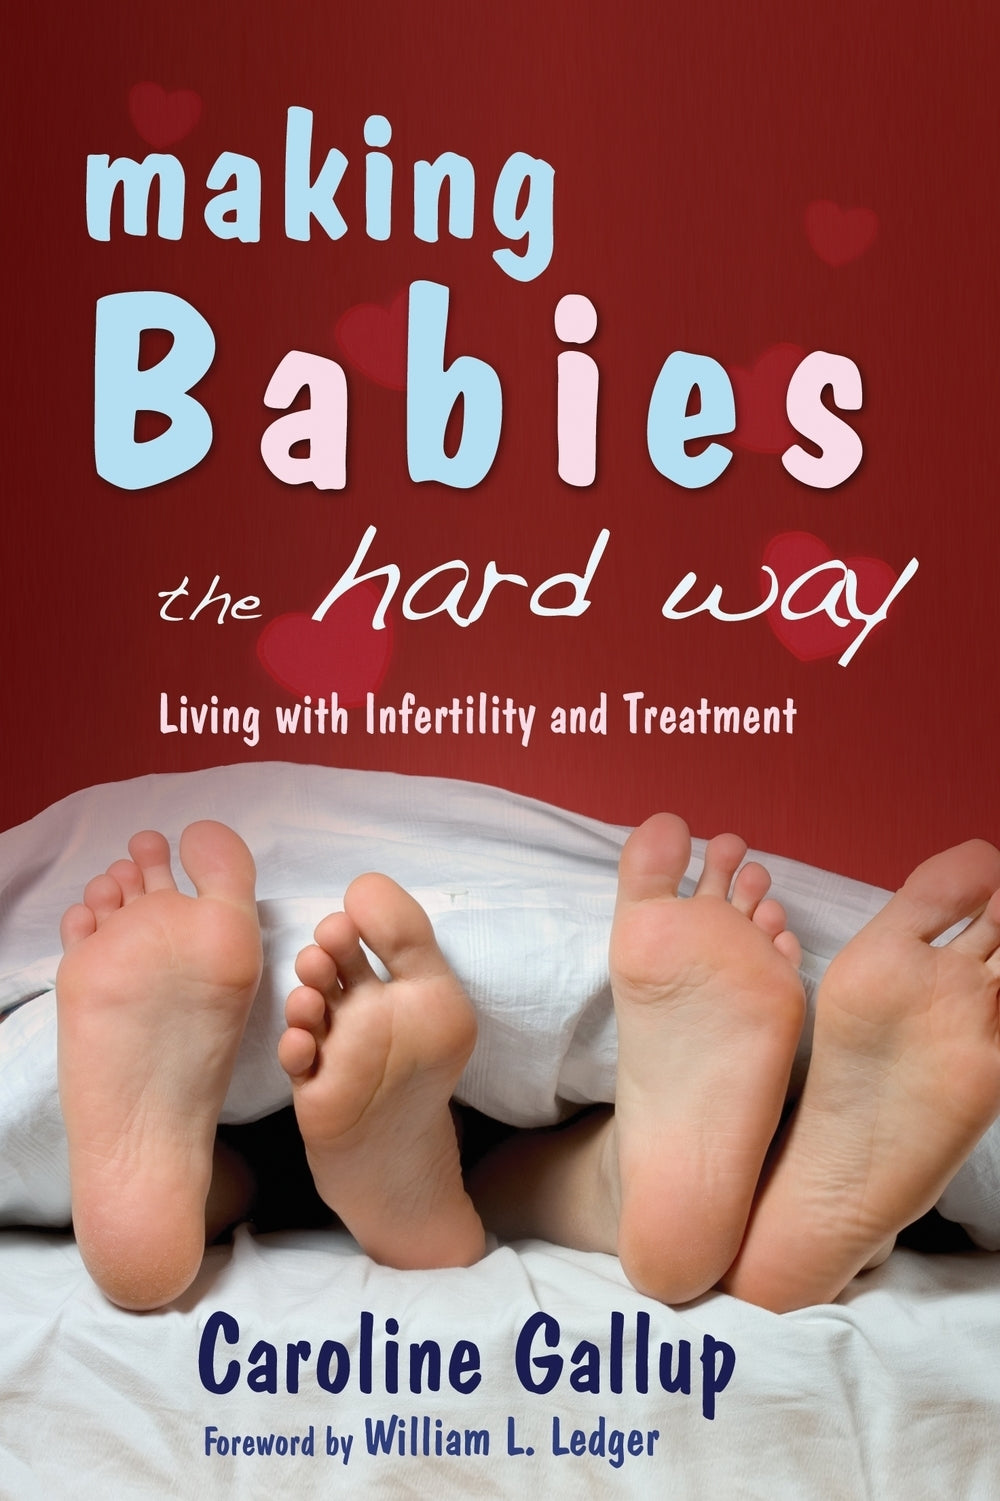 Making Babies the Hard Way by Caroline Gallup